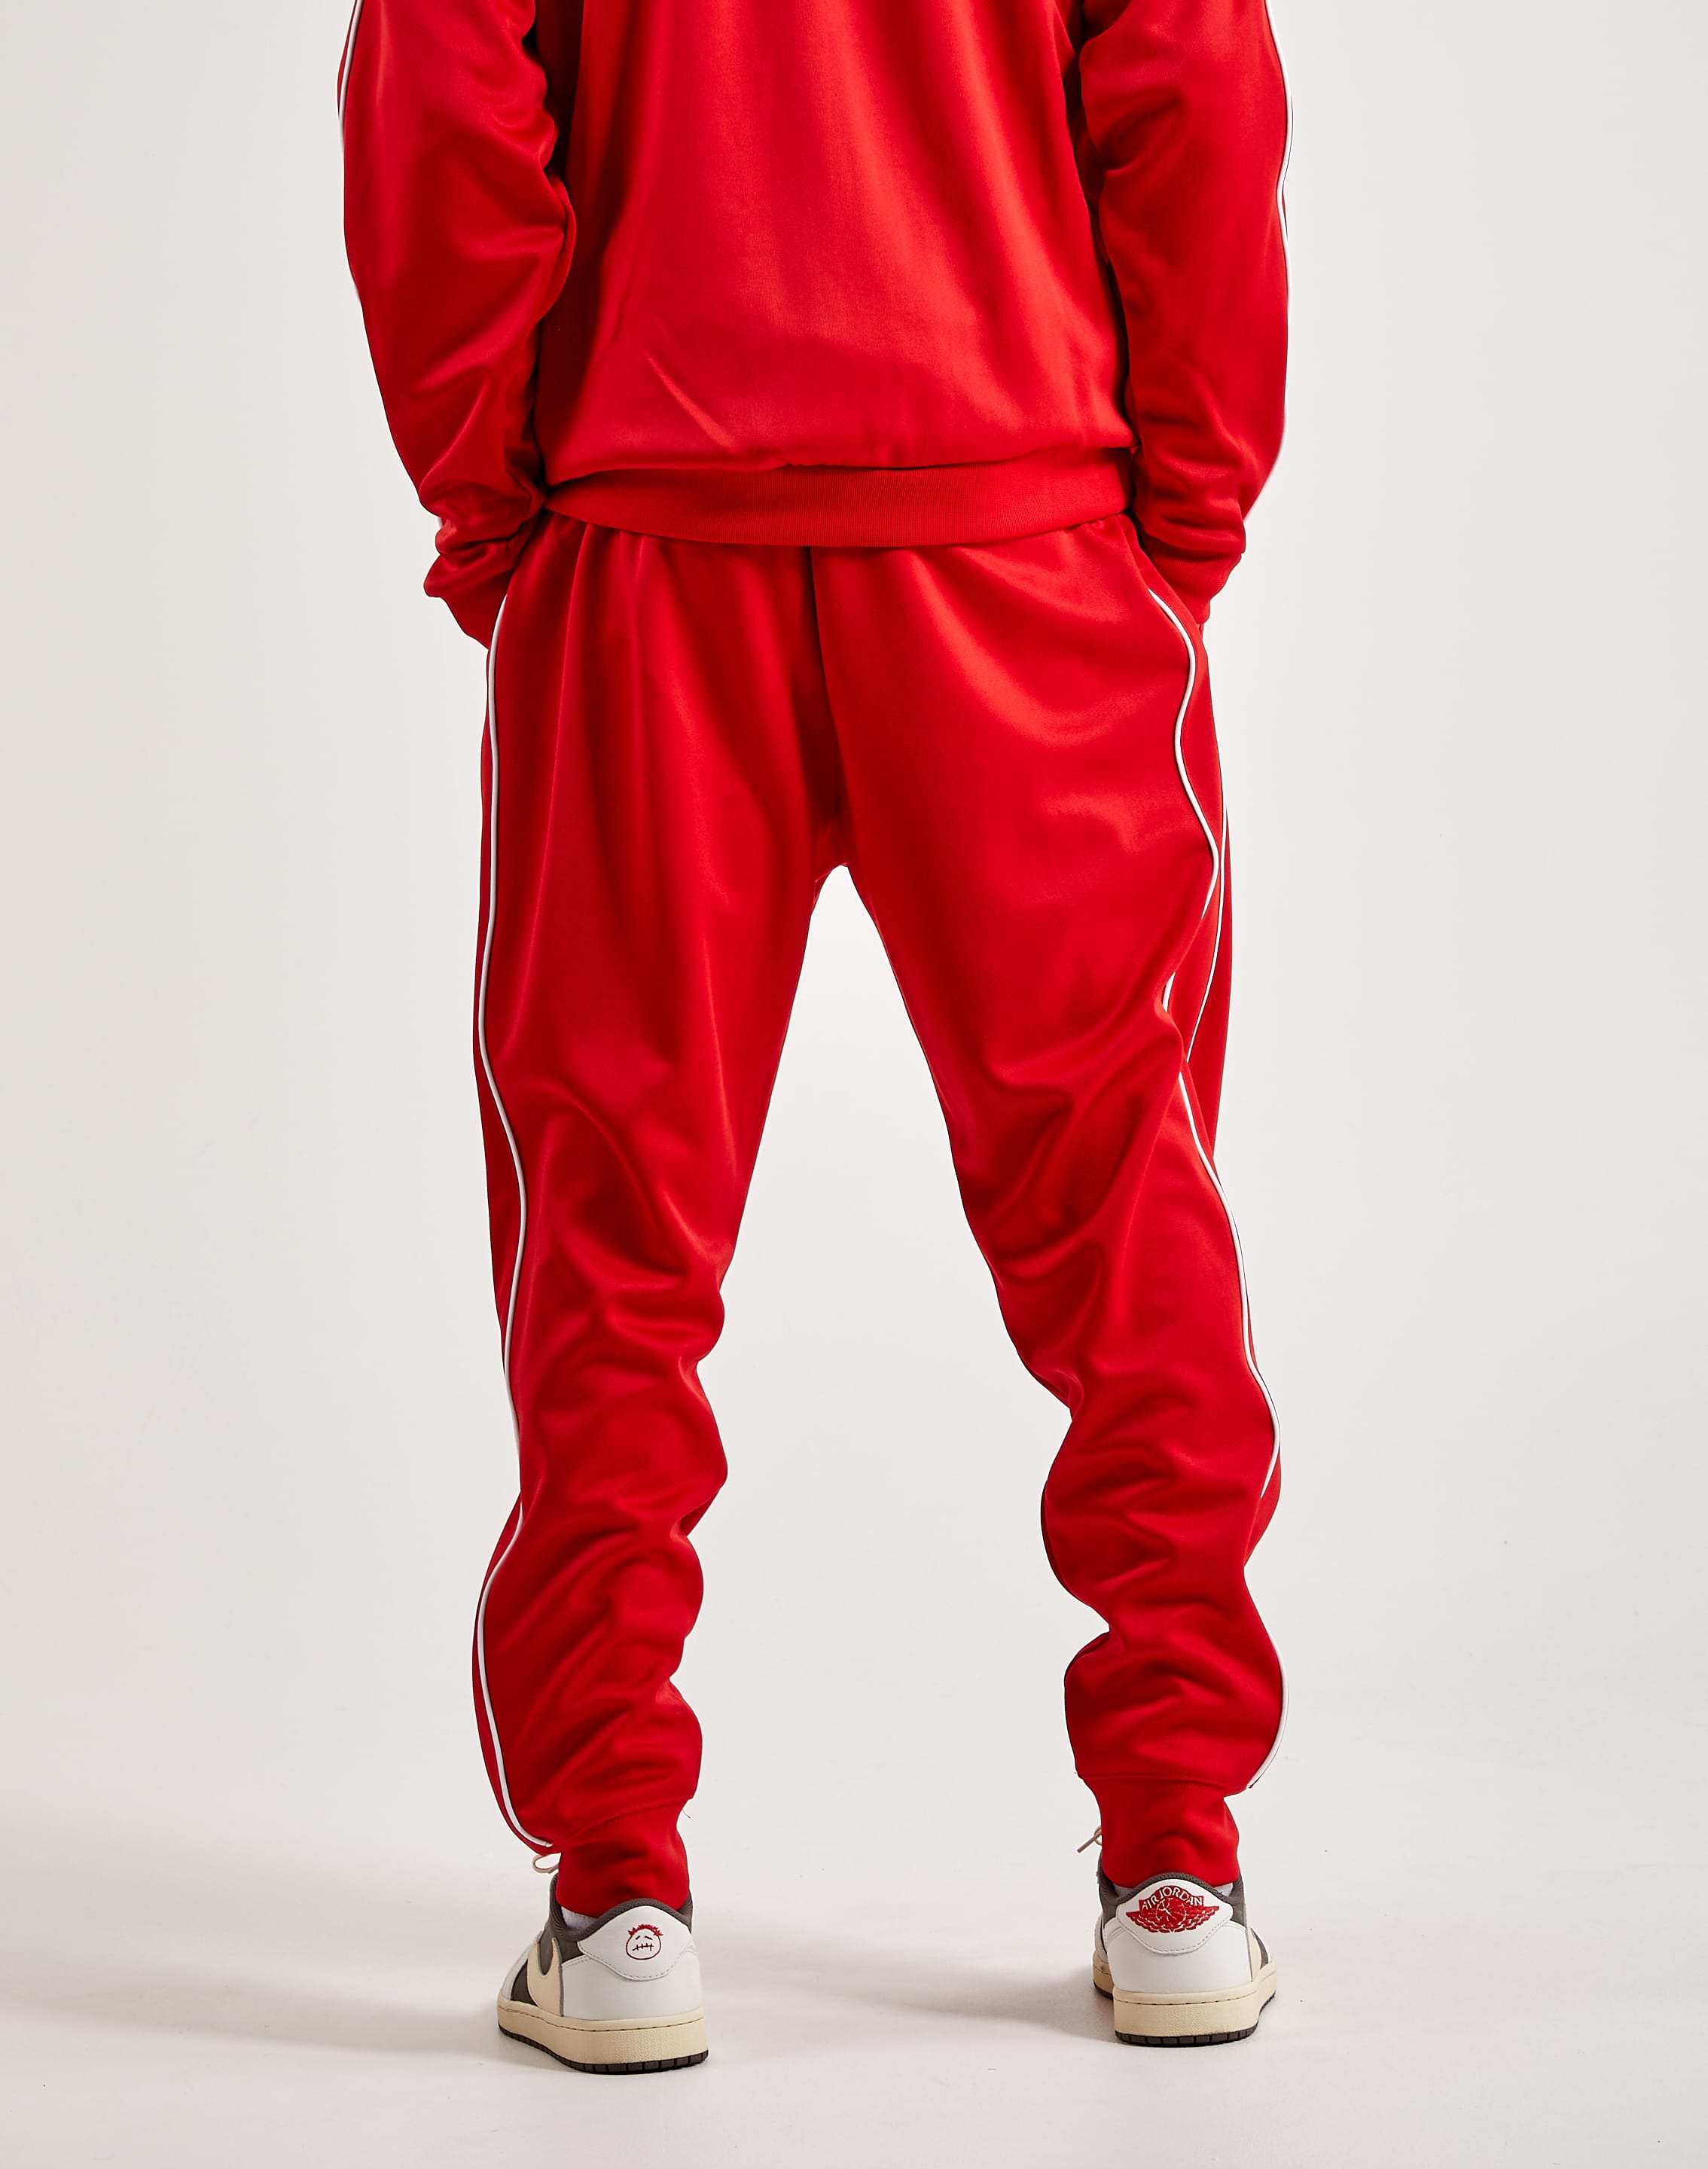 Nike Team USA Olympics Tokyo Medal Stand Track Pants CK4559-100. Adult Sz:  Small | eBay